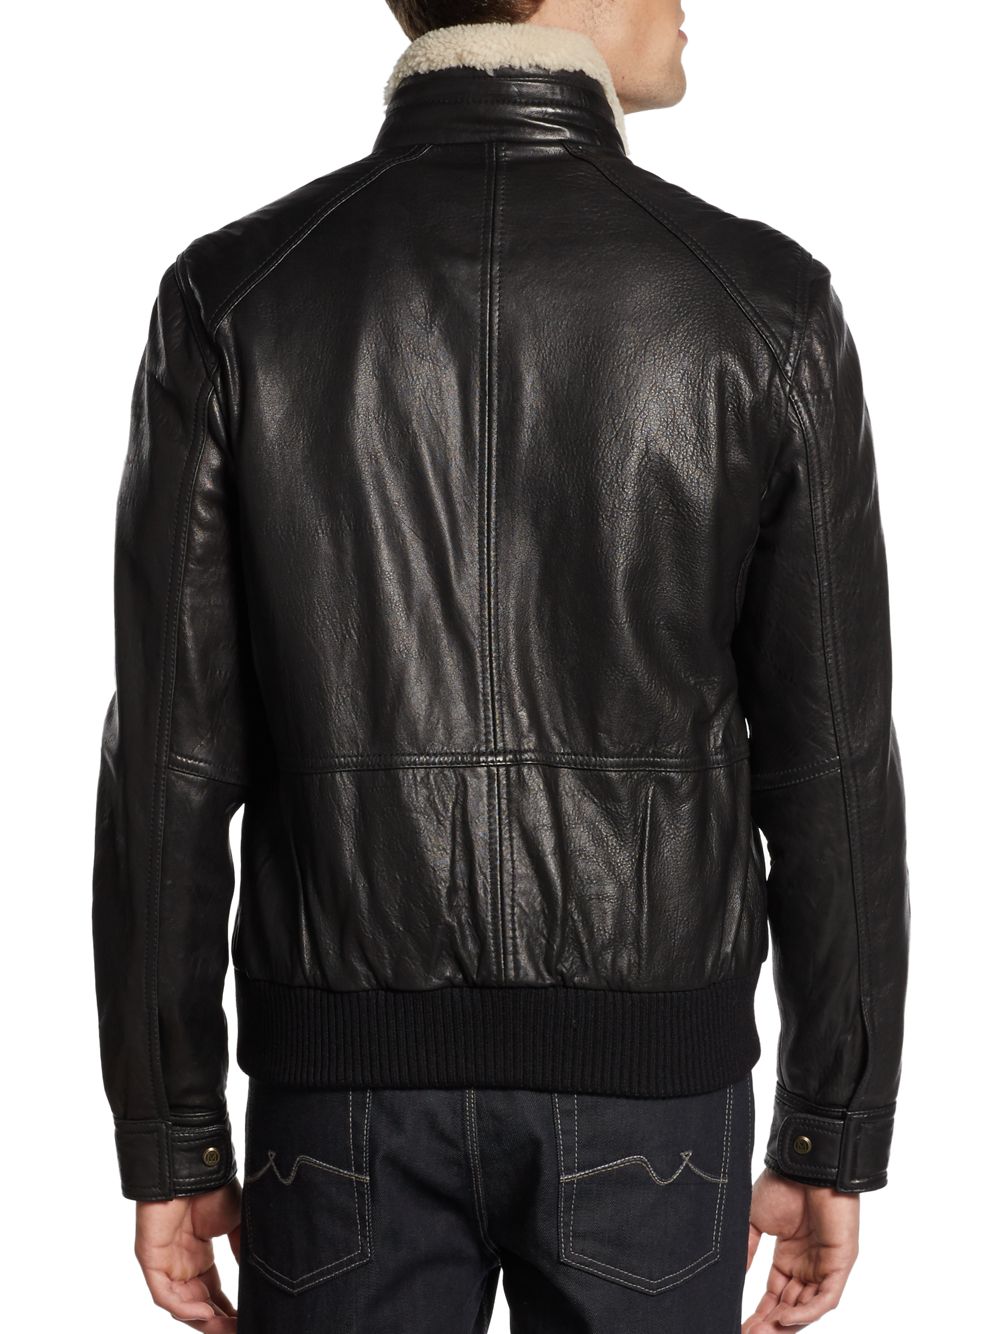 Lyst - Marc new york Norton Fur Collar Leather Jacket in Black for Men